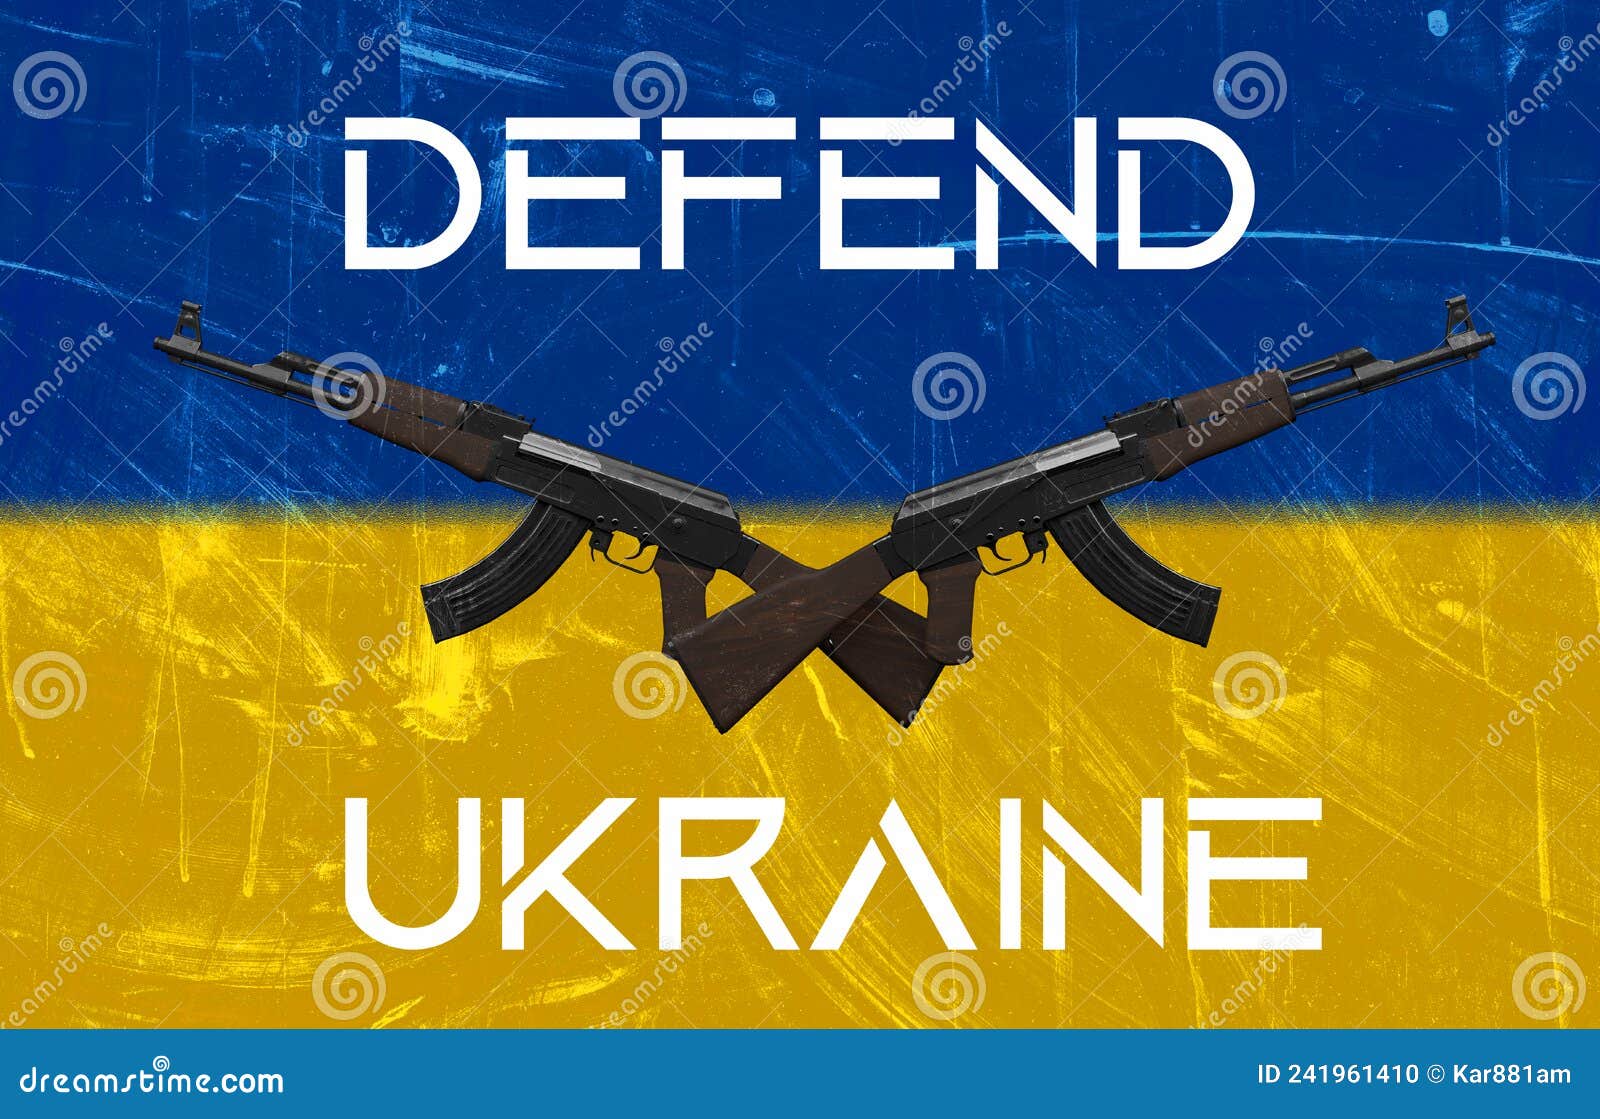 Defend Ukraine Wallpaper, AK-47 and Flag Ukraine Stock Illustration -  Illustration of ceremony, freedom: 241961410